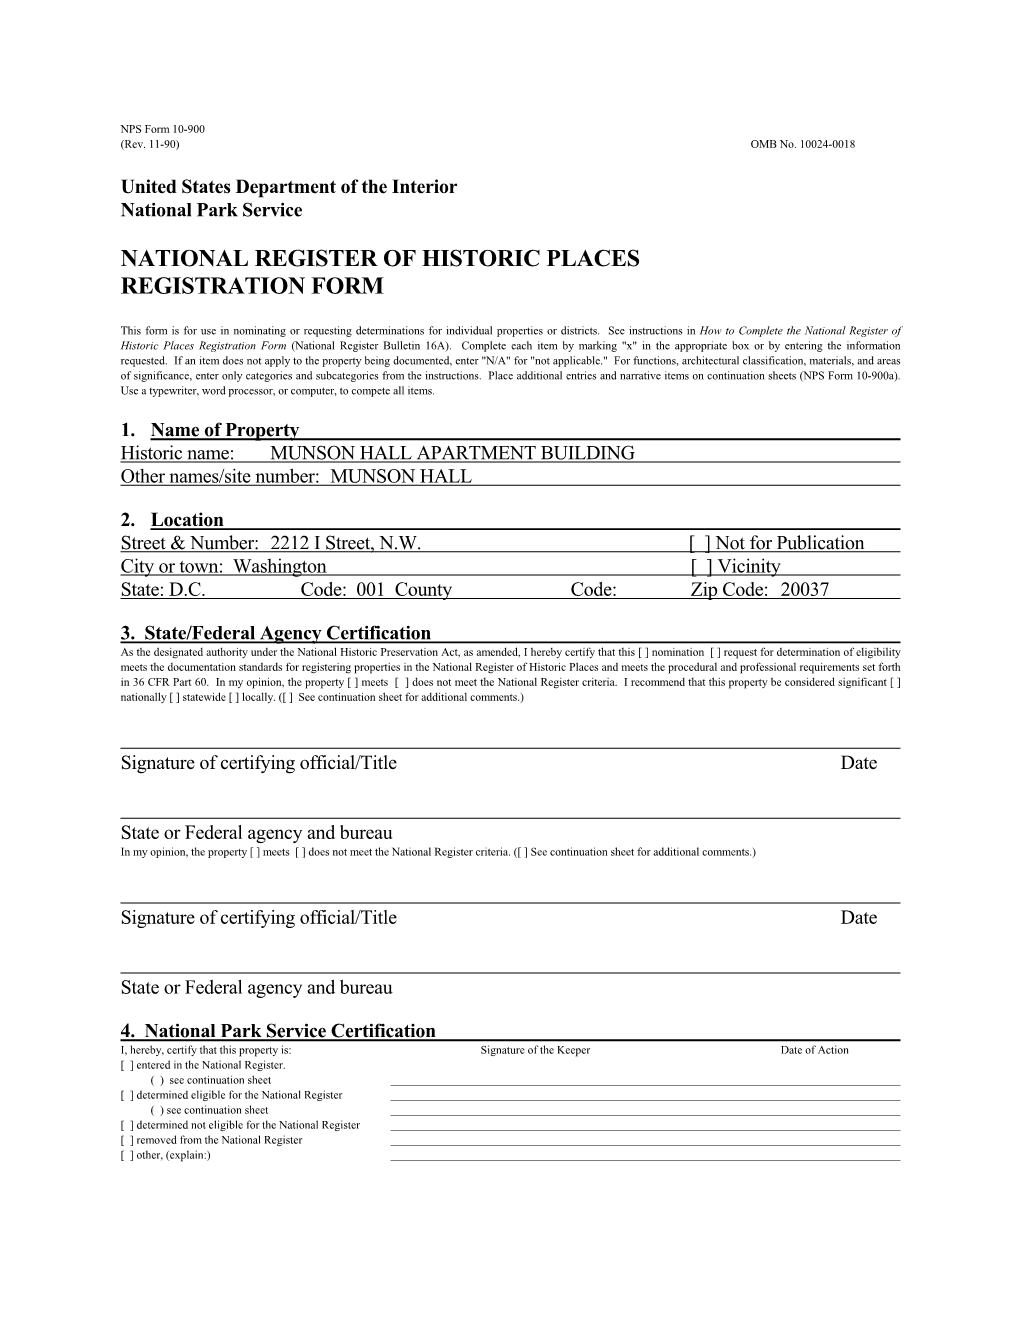 NPS Form 10-900 (Rev